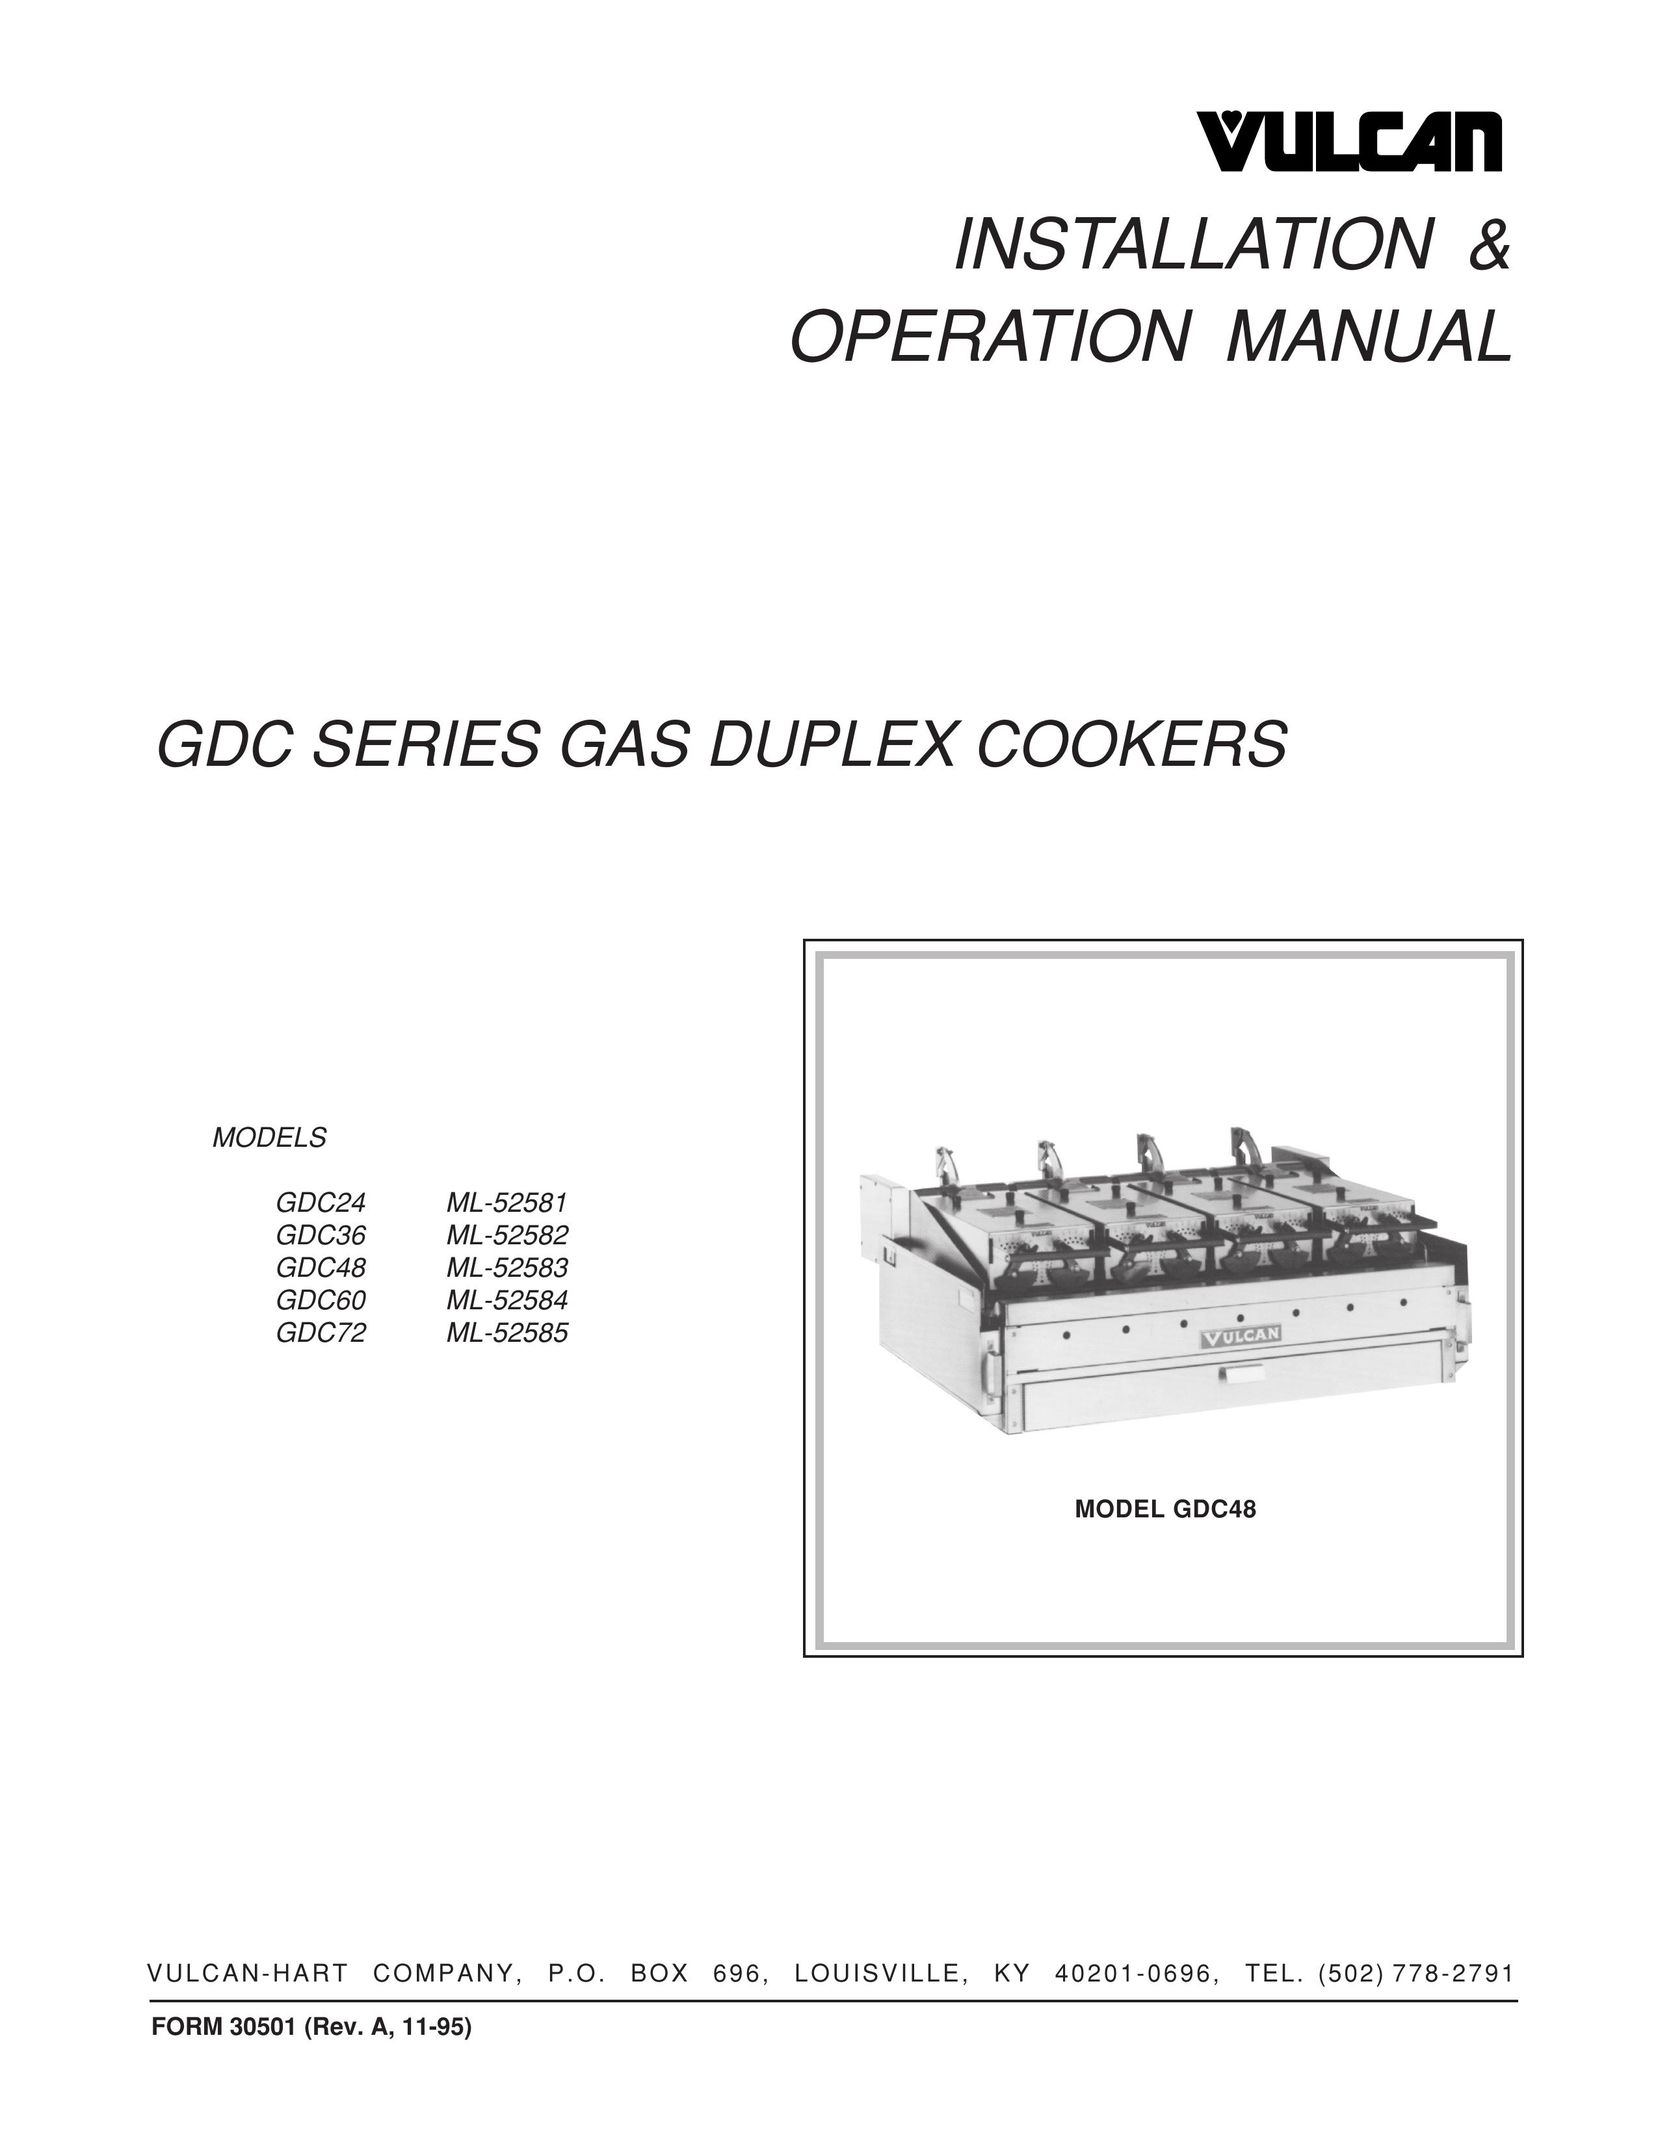 Vulcan-Hart GDC60 ML-52584 Cooktop User Manual